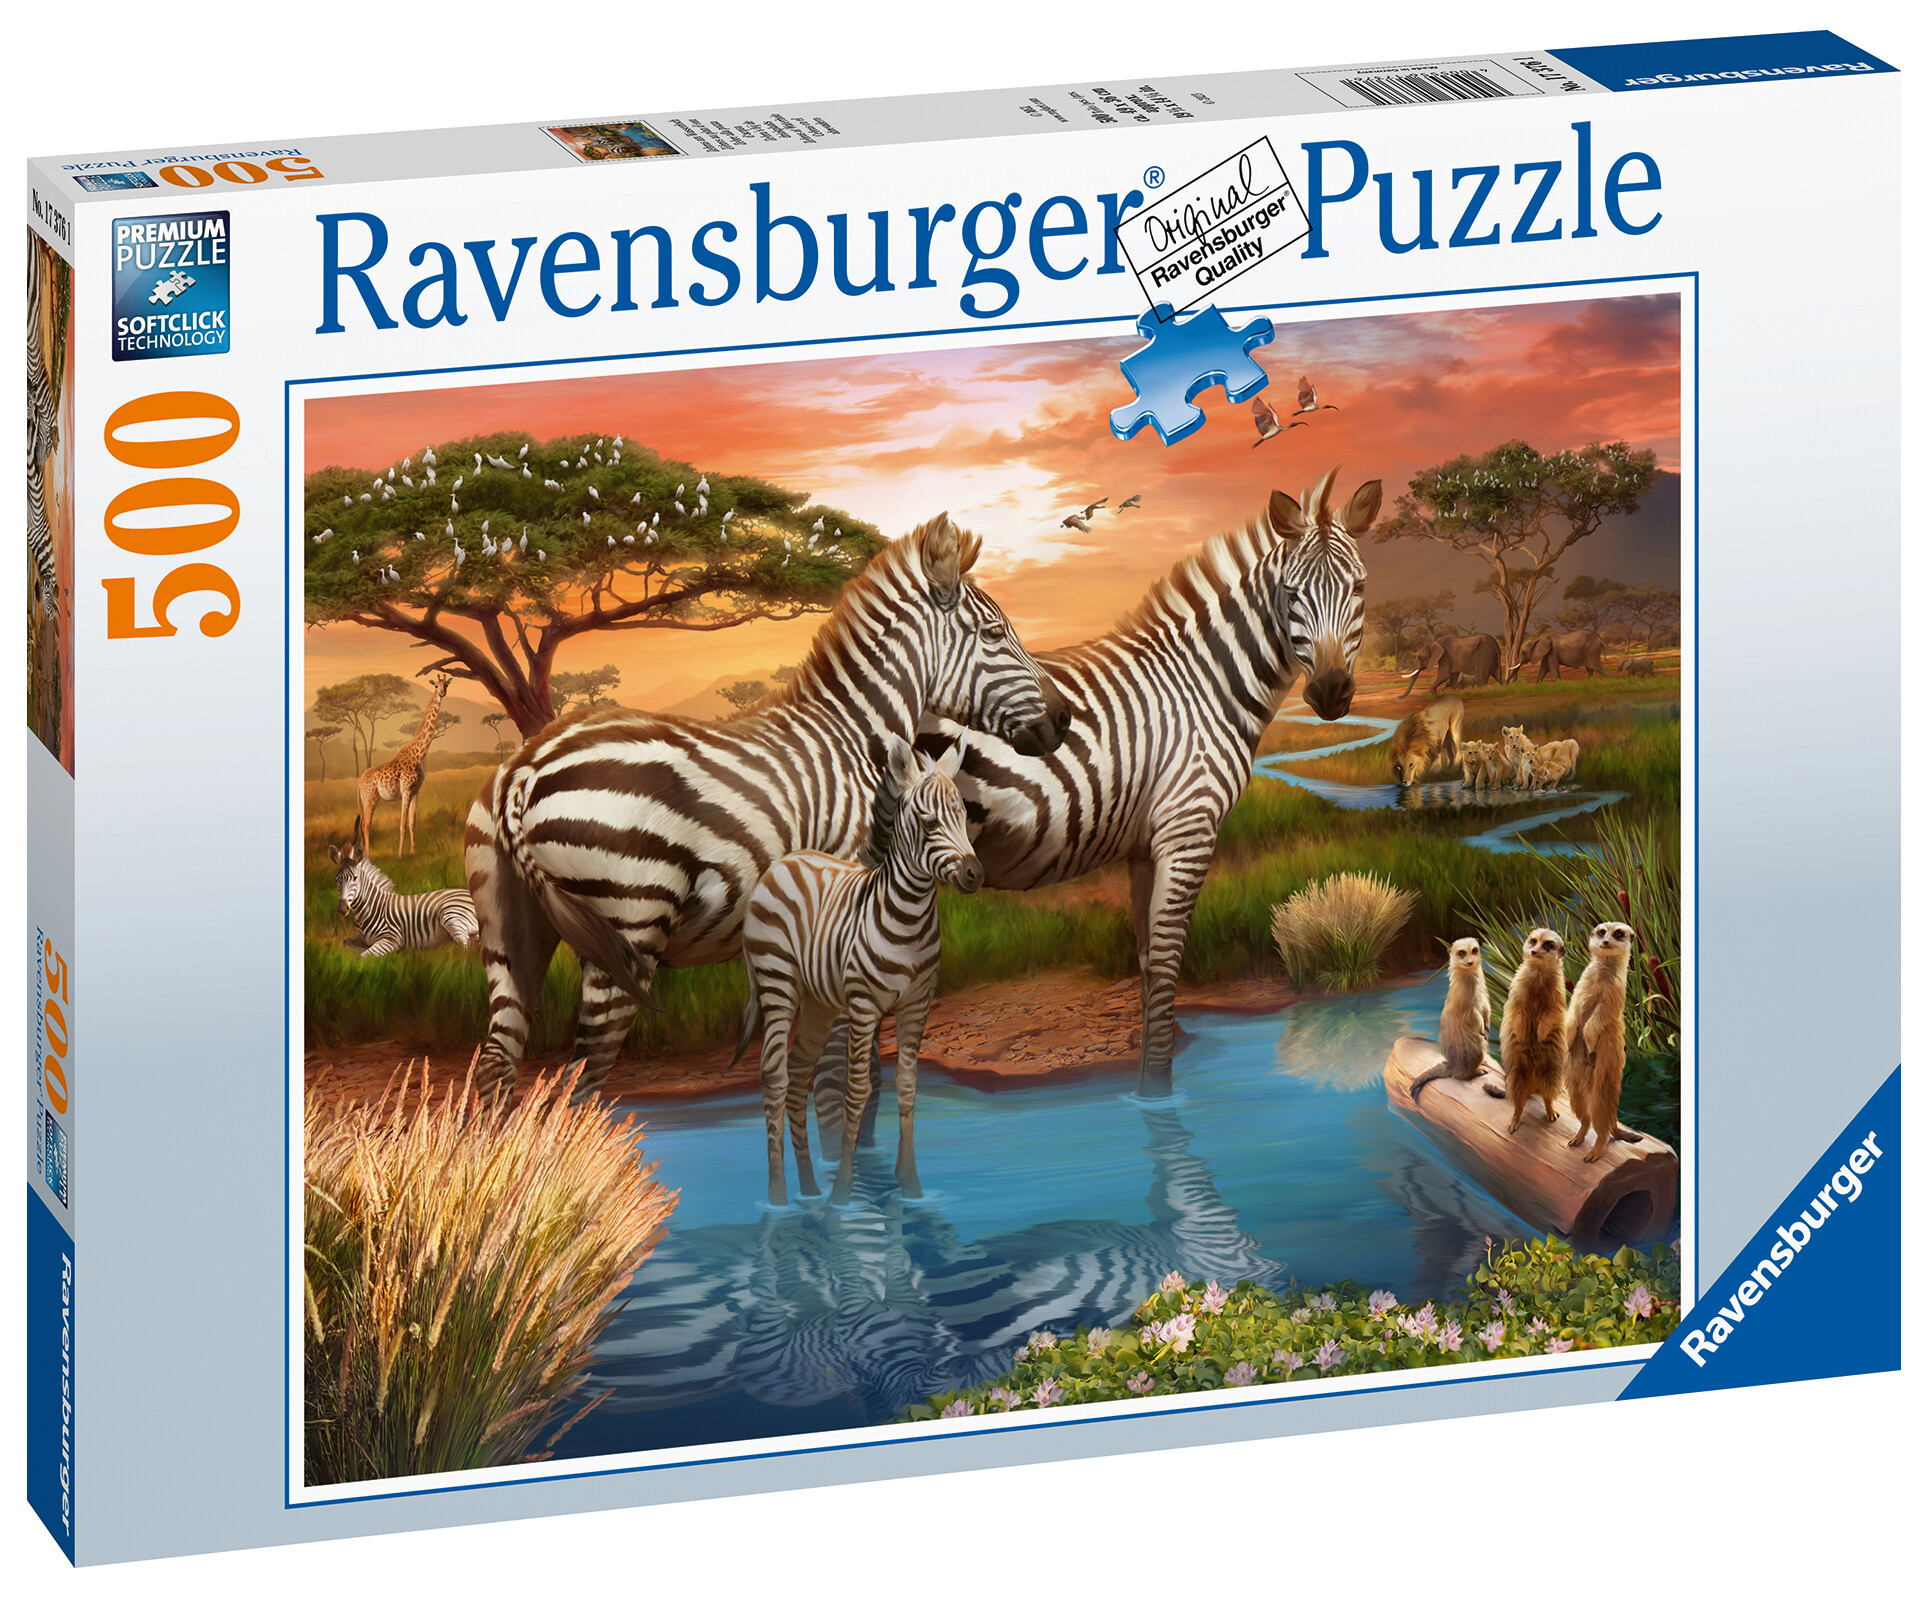 Ravensburger - puzzle zebre alla pozza d'acqua, 500 pezzi, puzzle